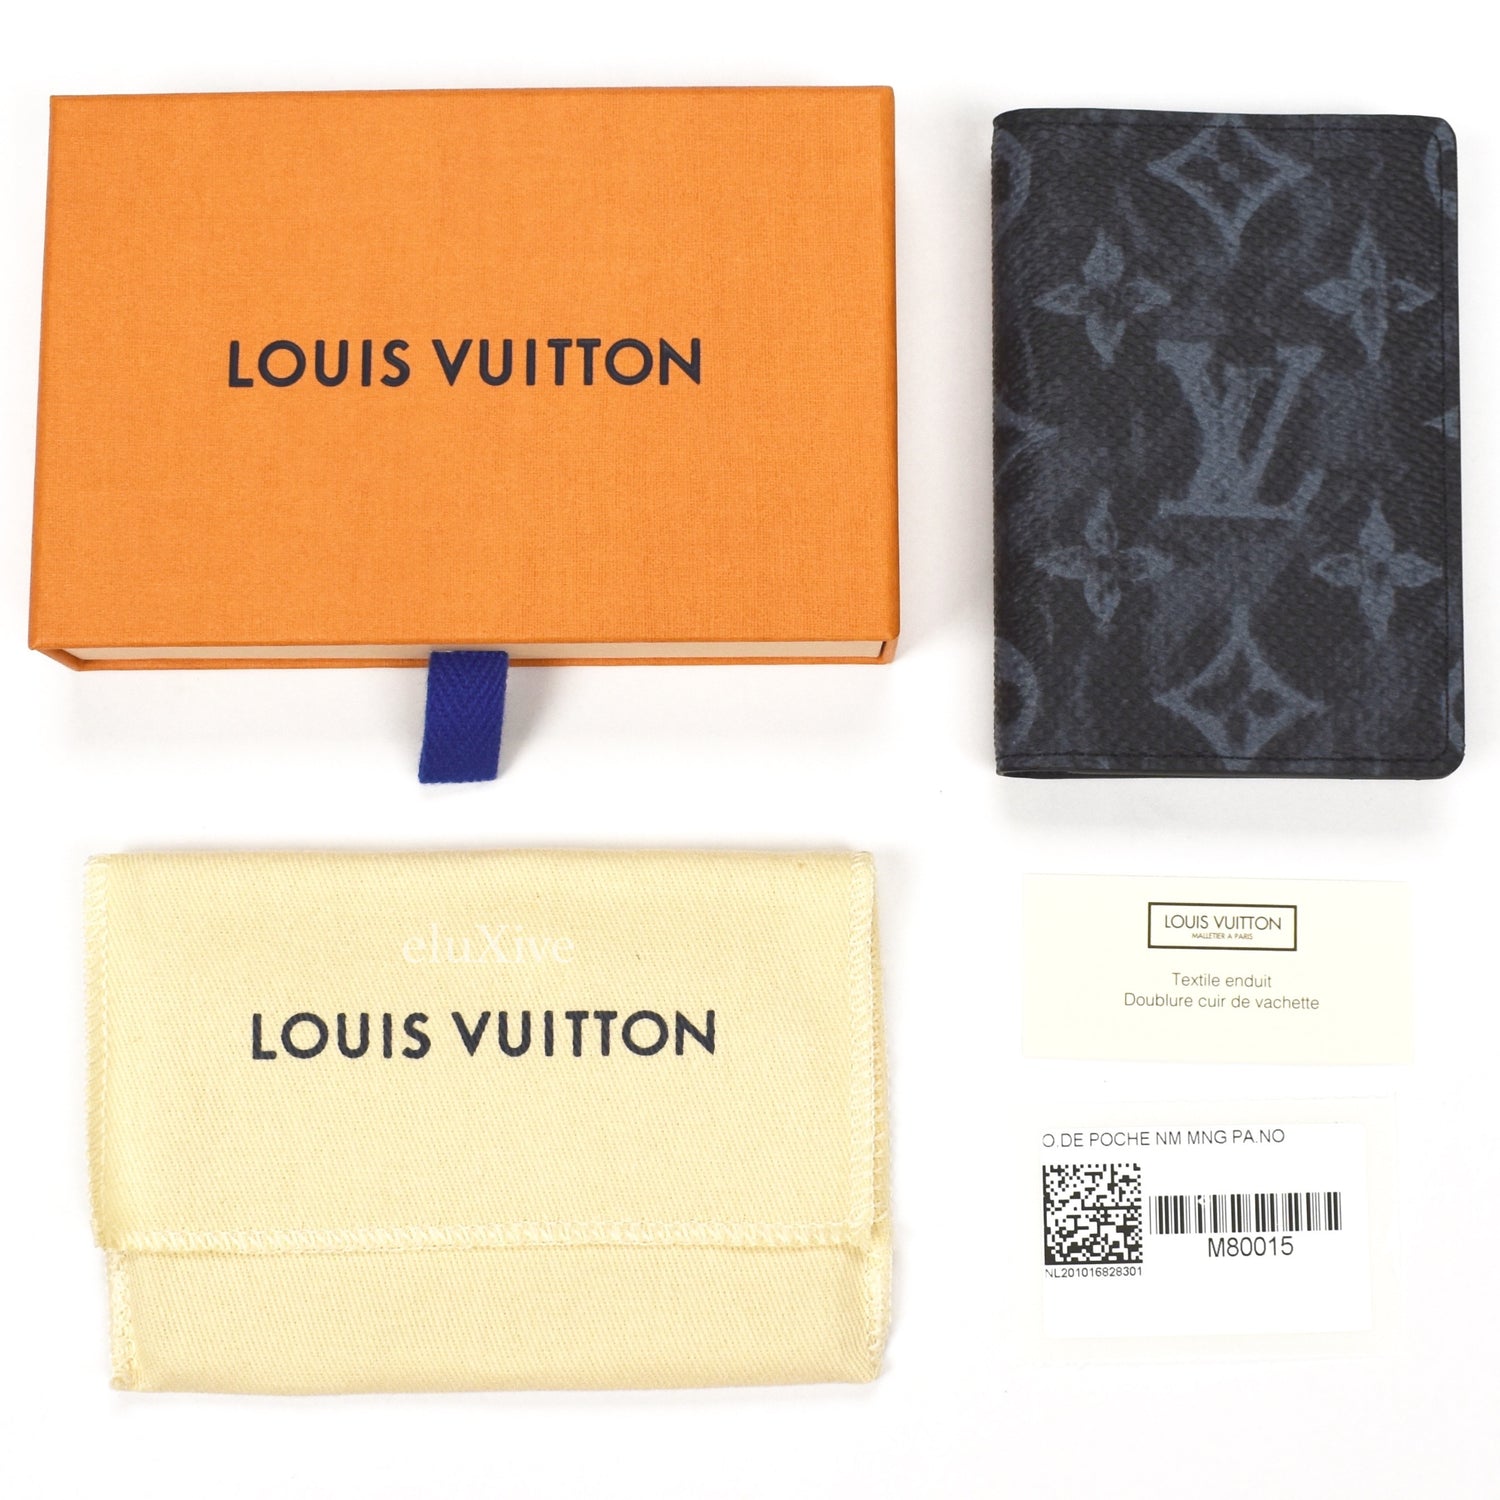 Unused Louis Vuitton Virgil Abloh 2020 Pocket Organizer Wallet